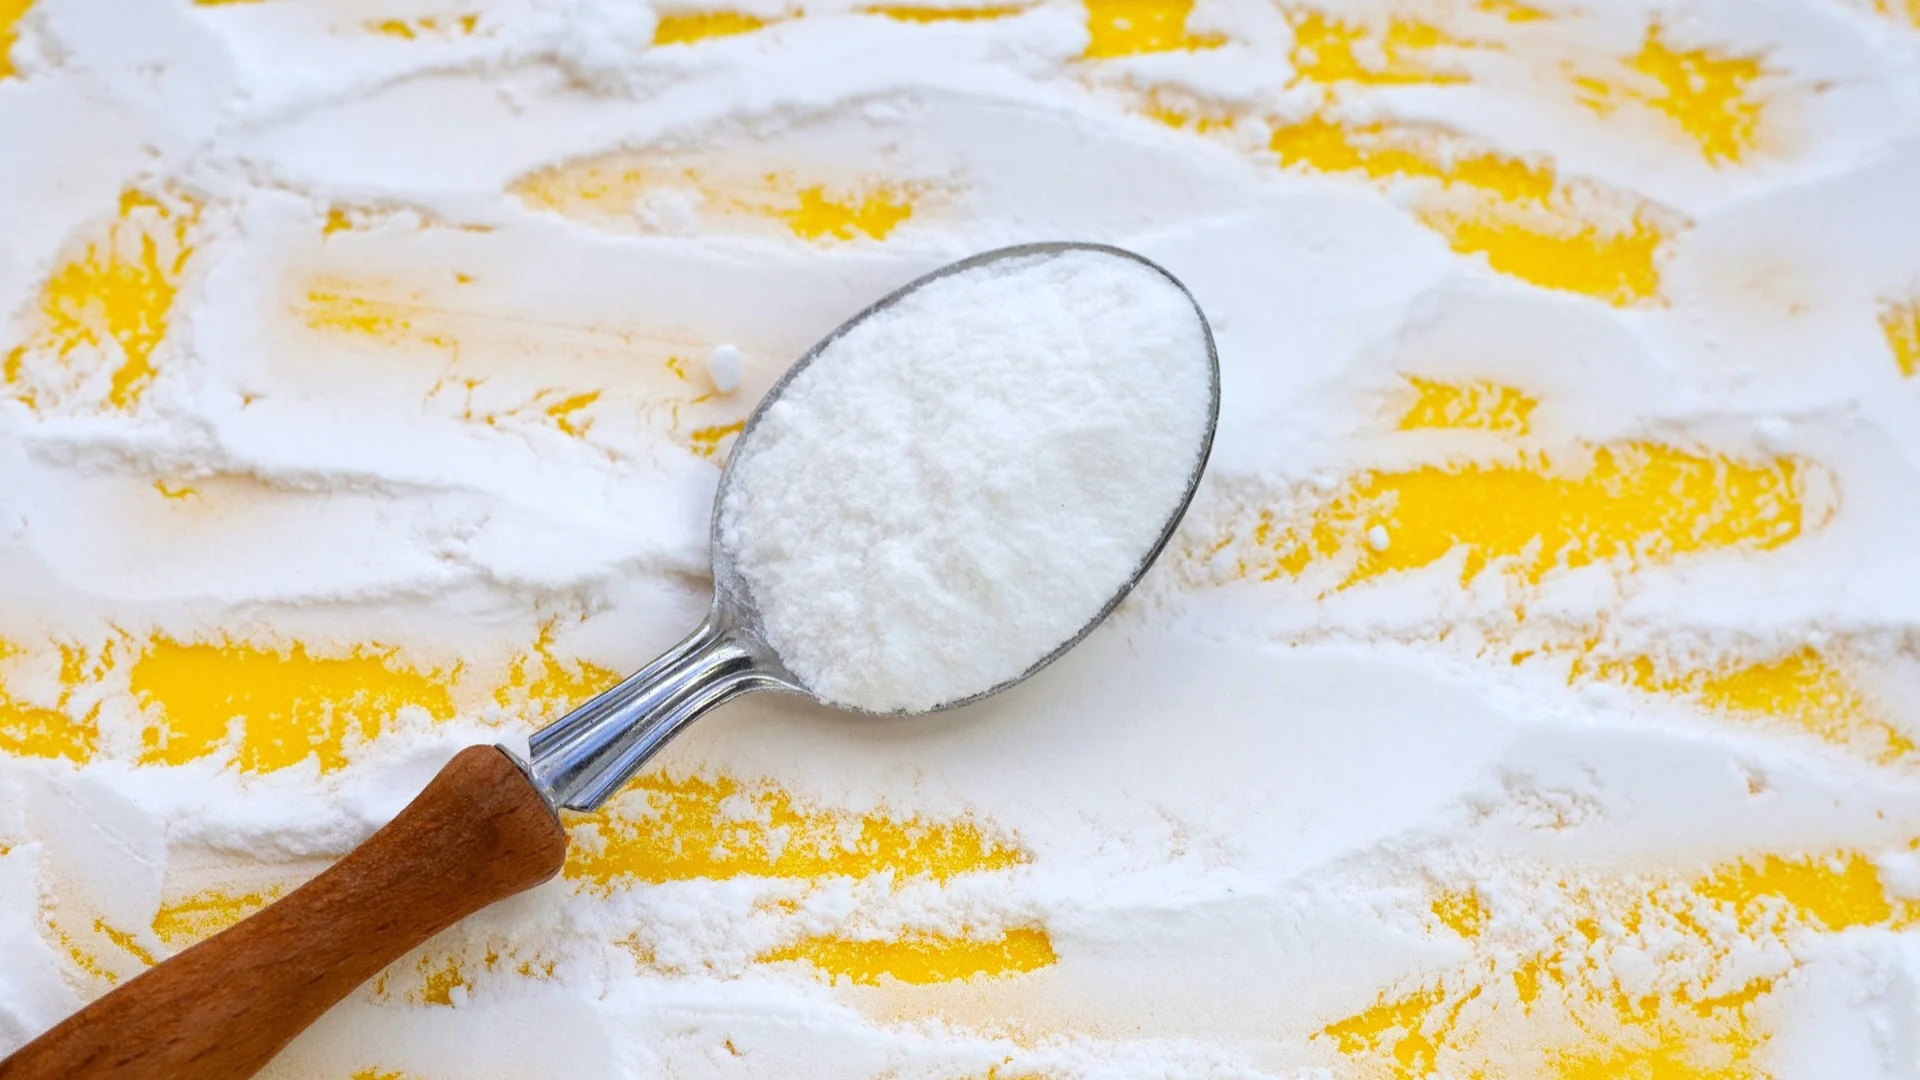 1 tablespoon of flour = 8 grams